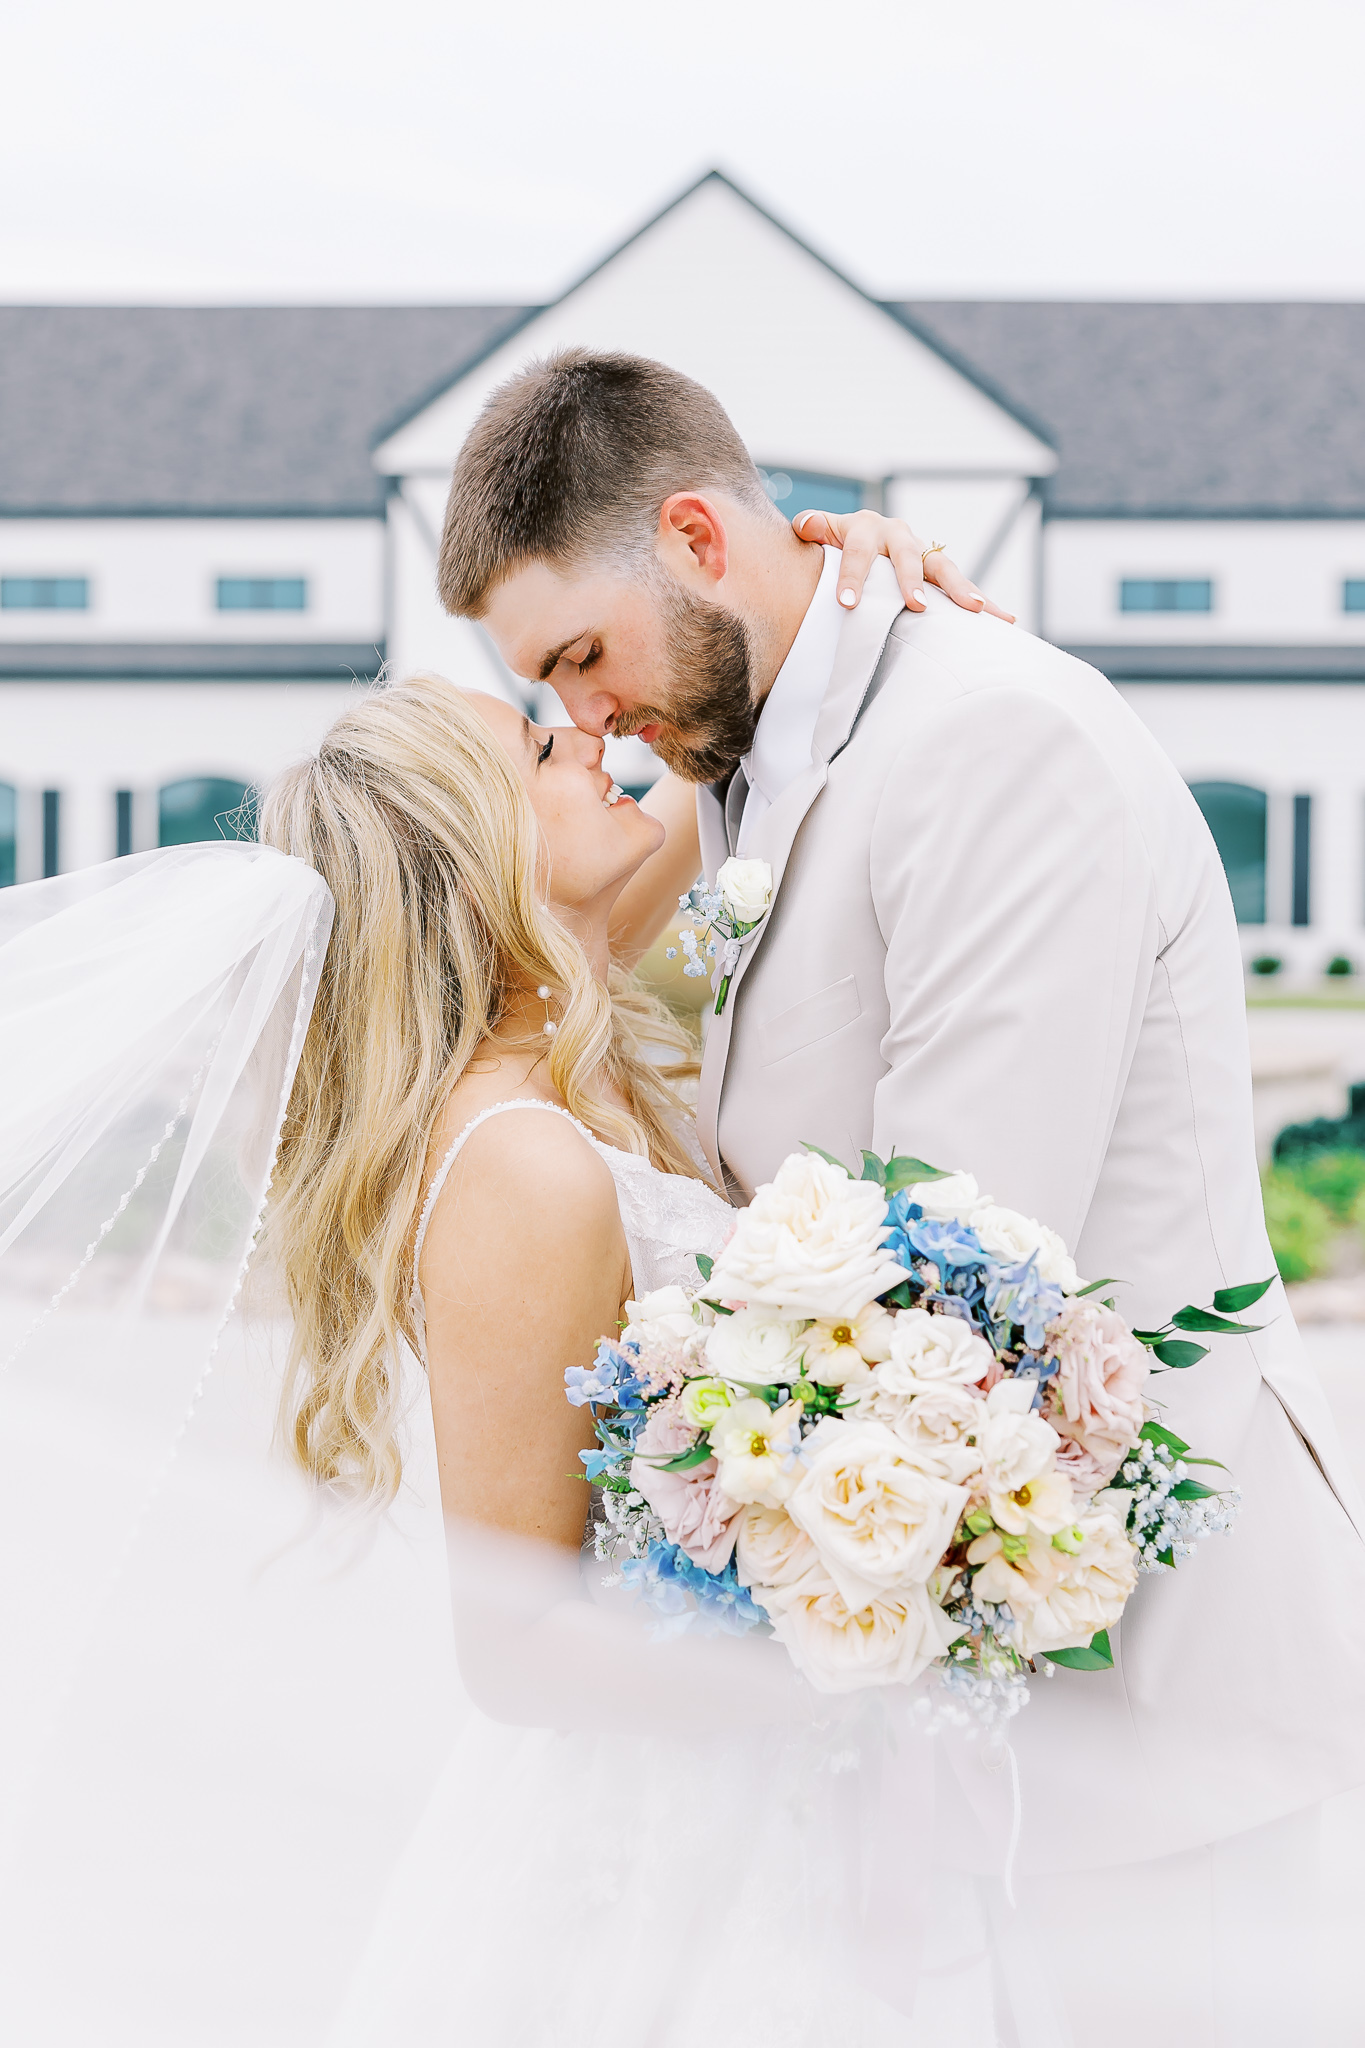 Lindsey & Cooper's wedding at The Gardenia venue | Dallas Wedding Photographer